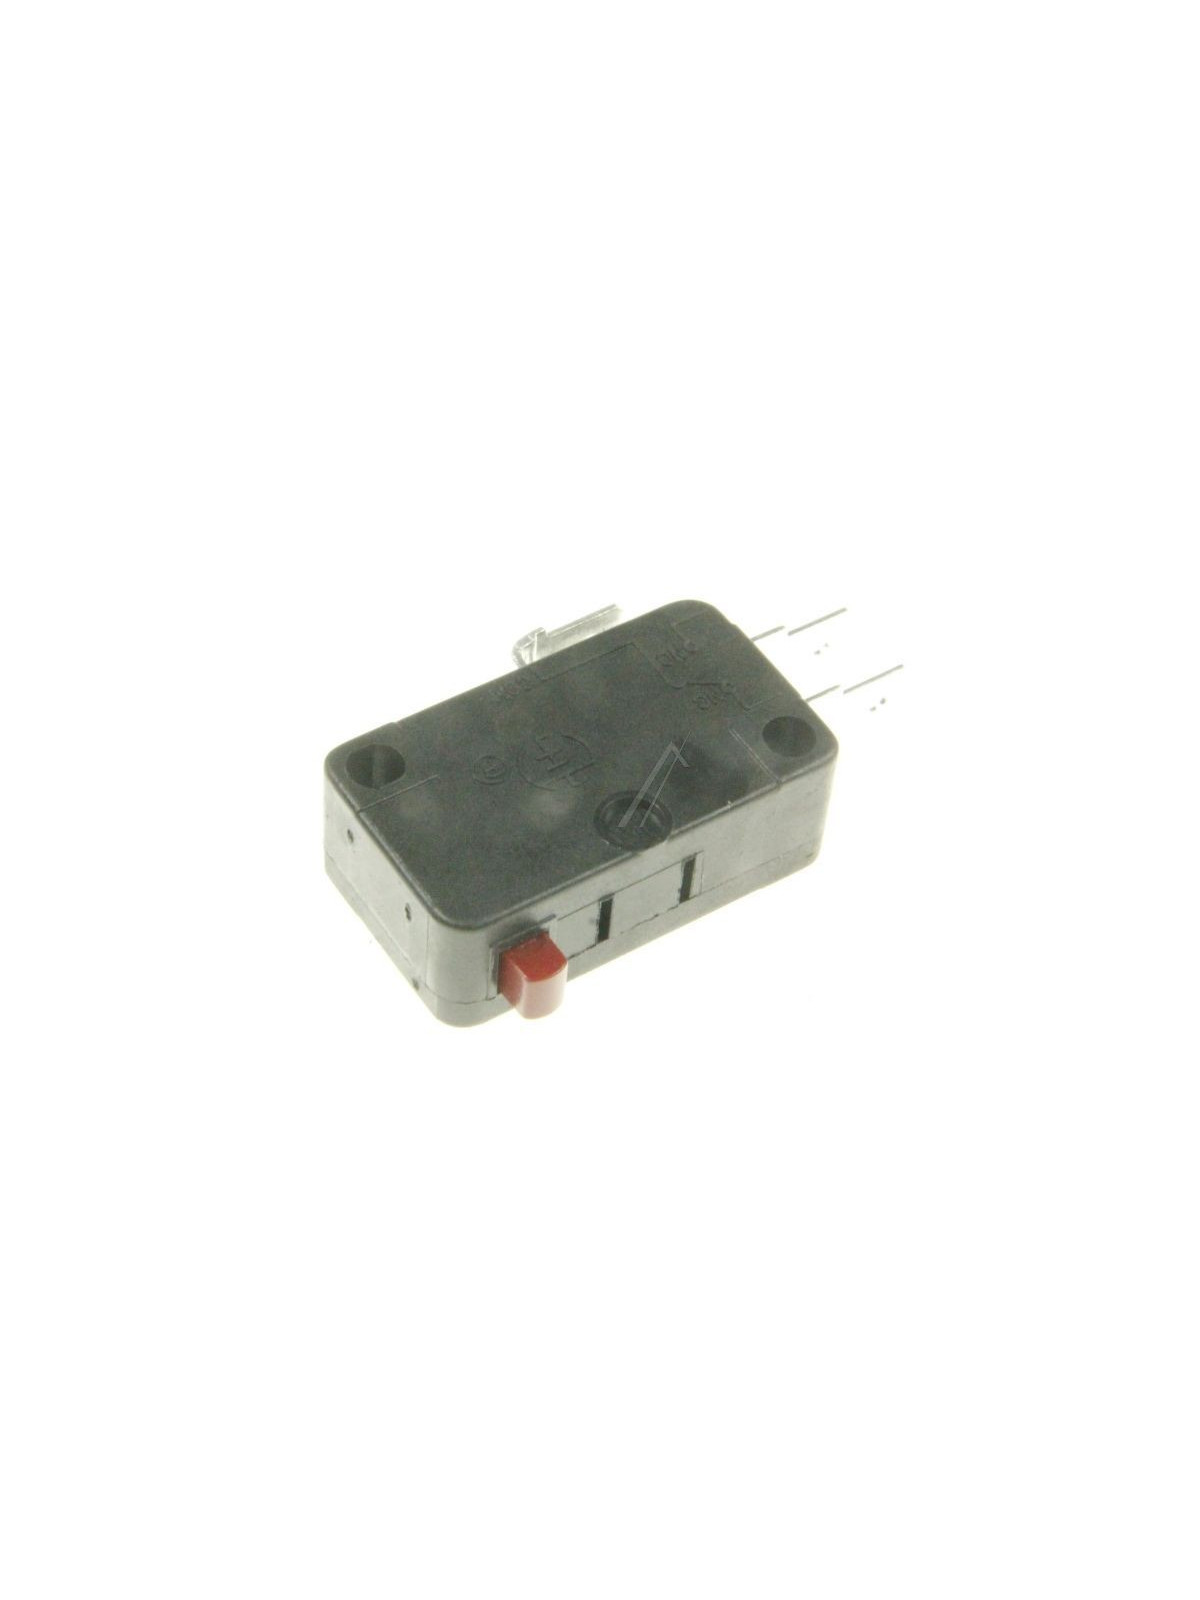 Interrupteur moniteur Sharp R843 - Micro-ondes